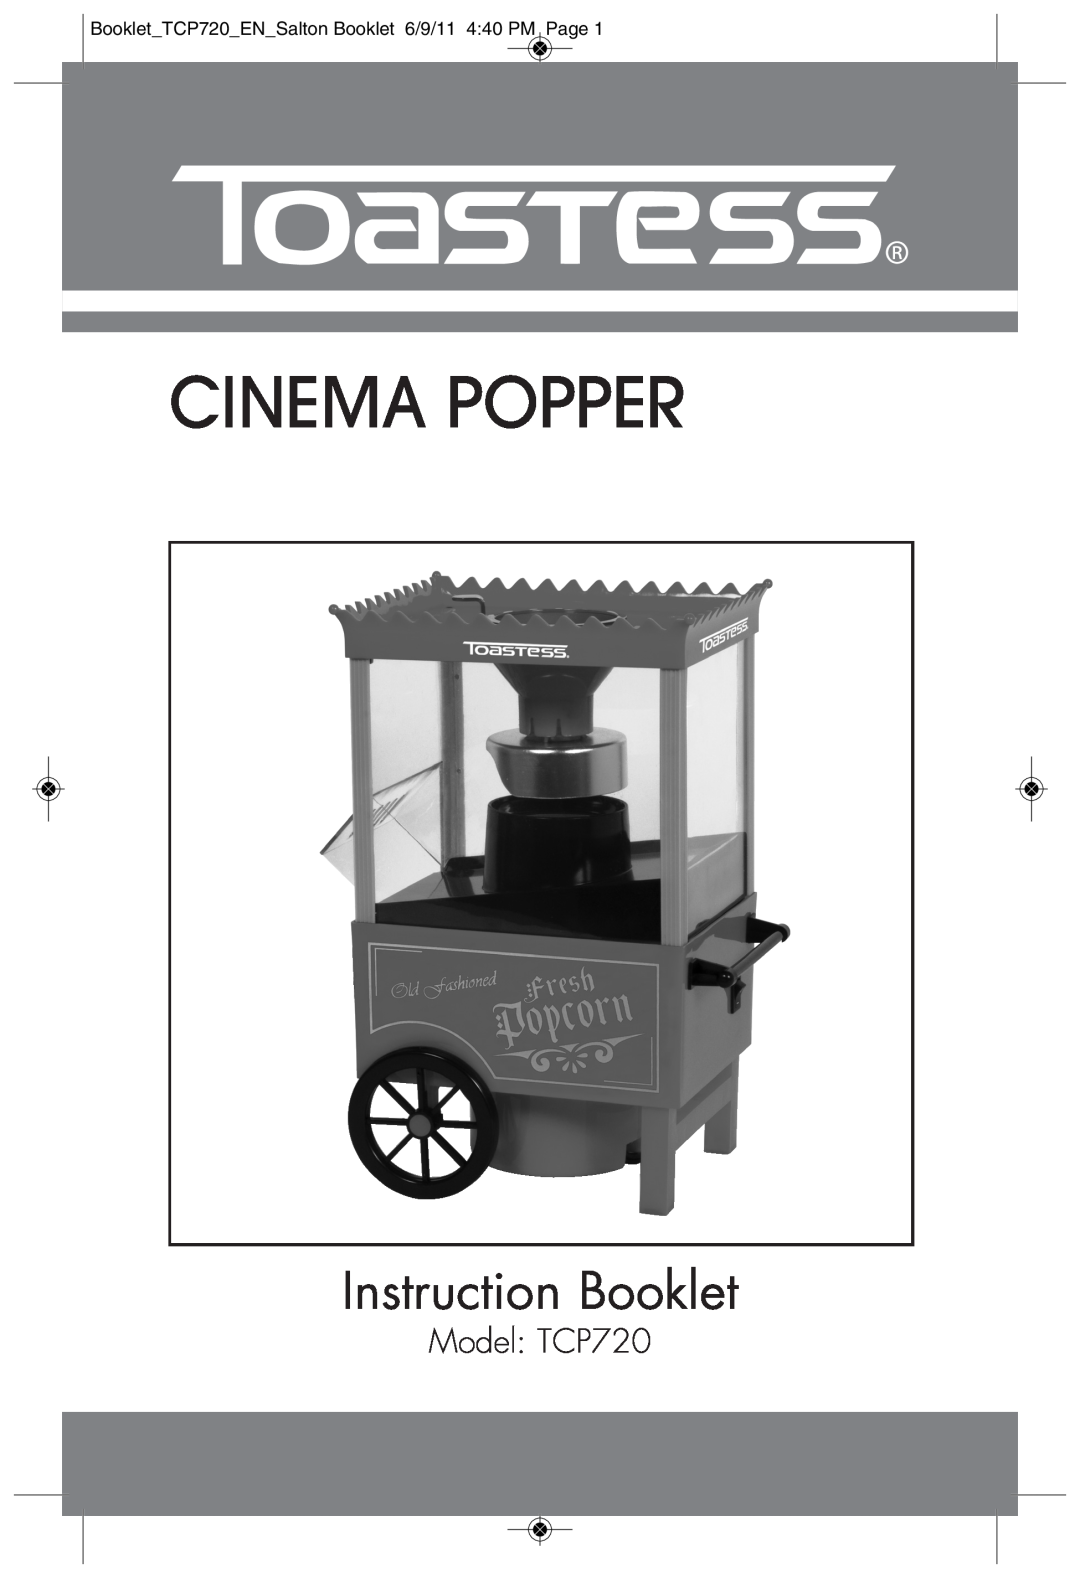 Toastess manual Cinema Popper, Instruction Booklet, Model TCP720 